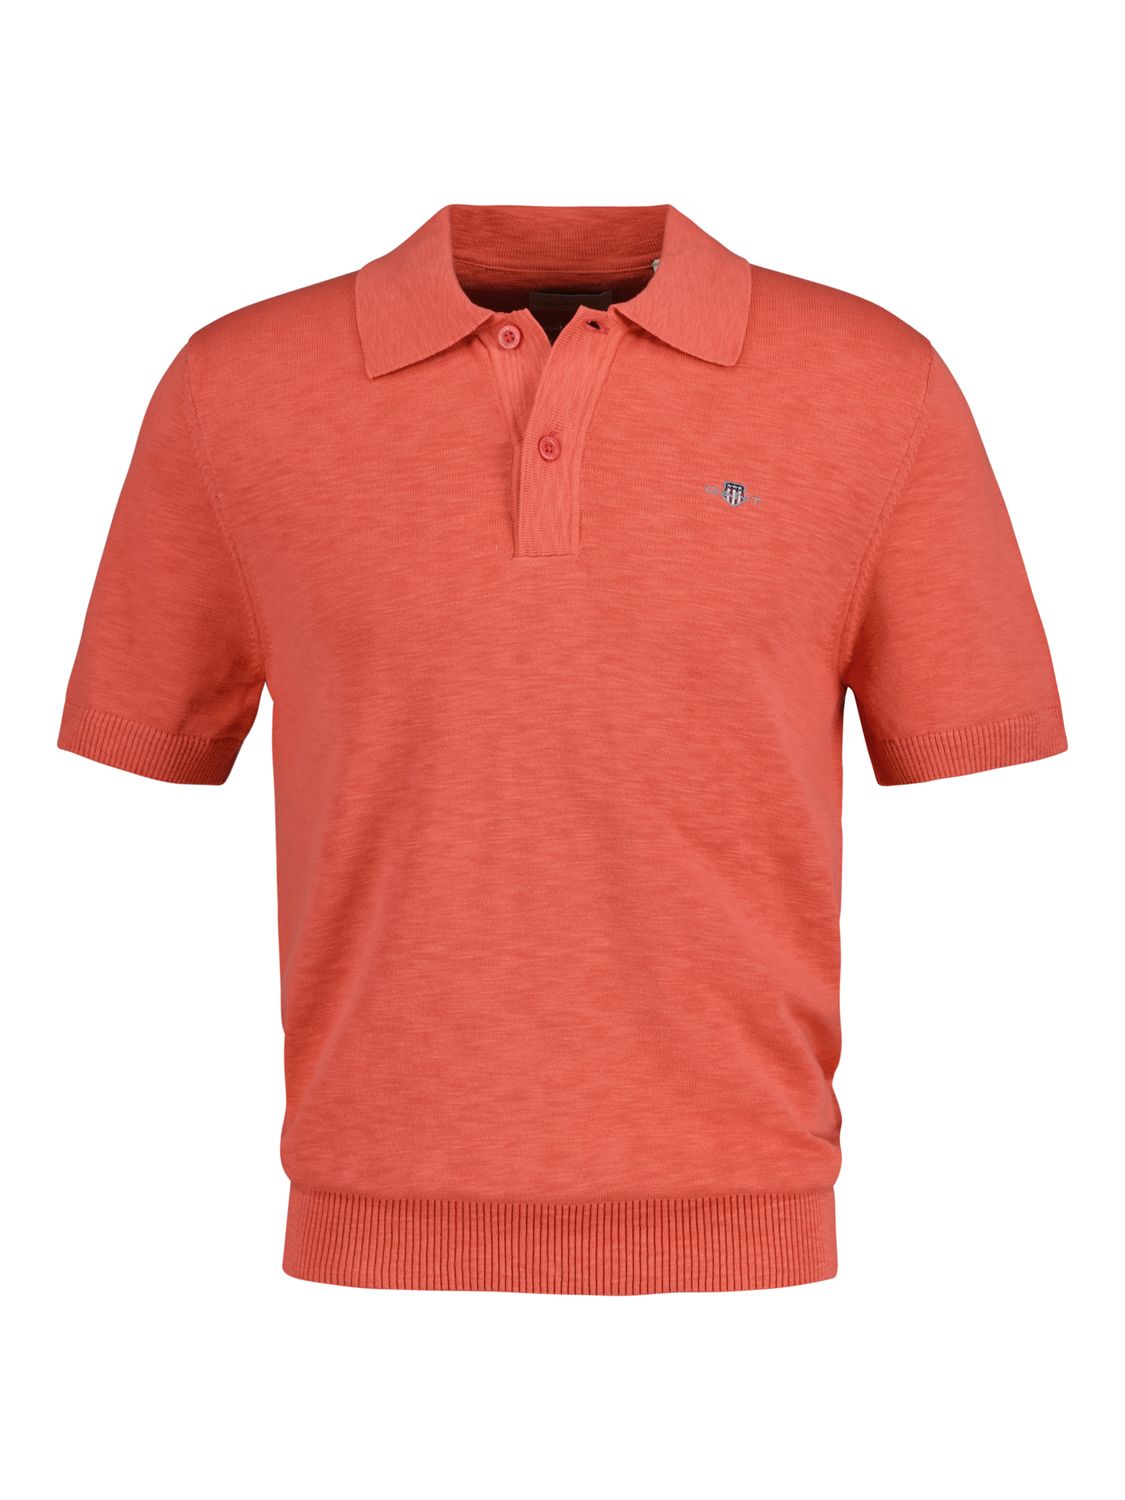 GANT Flamme Short Sleeve Polo Shirt, Sunset Pink, M